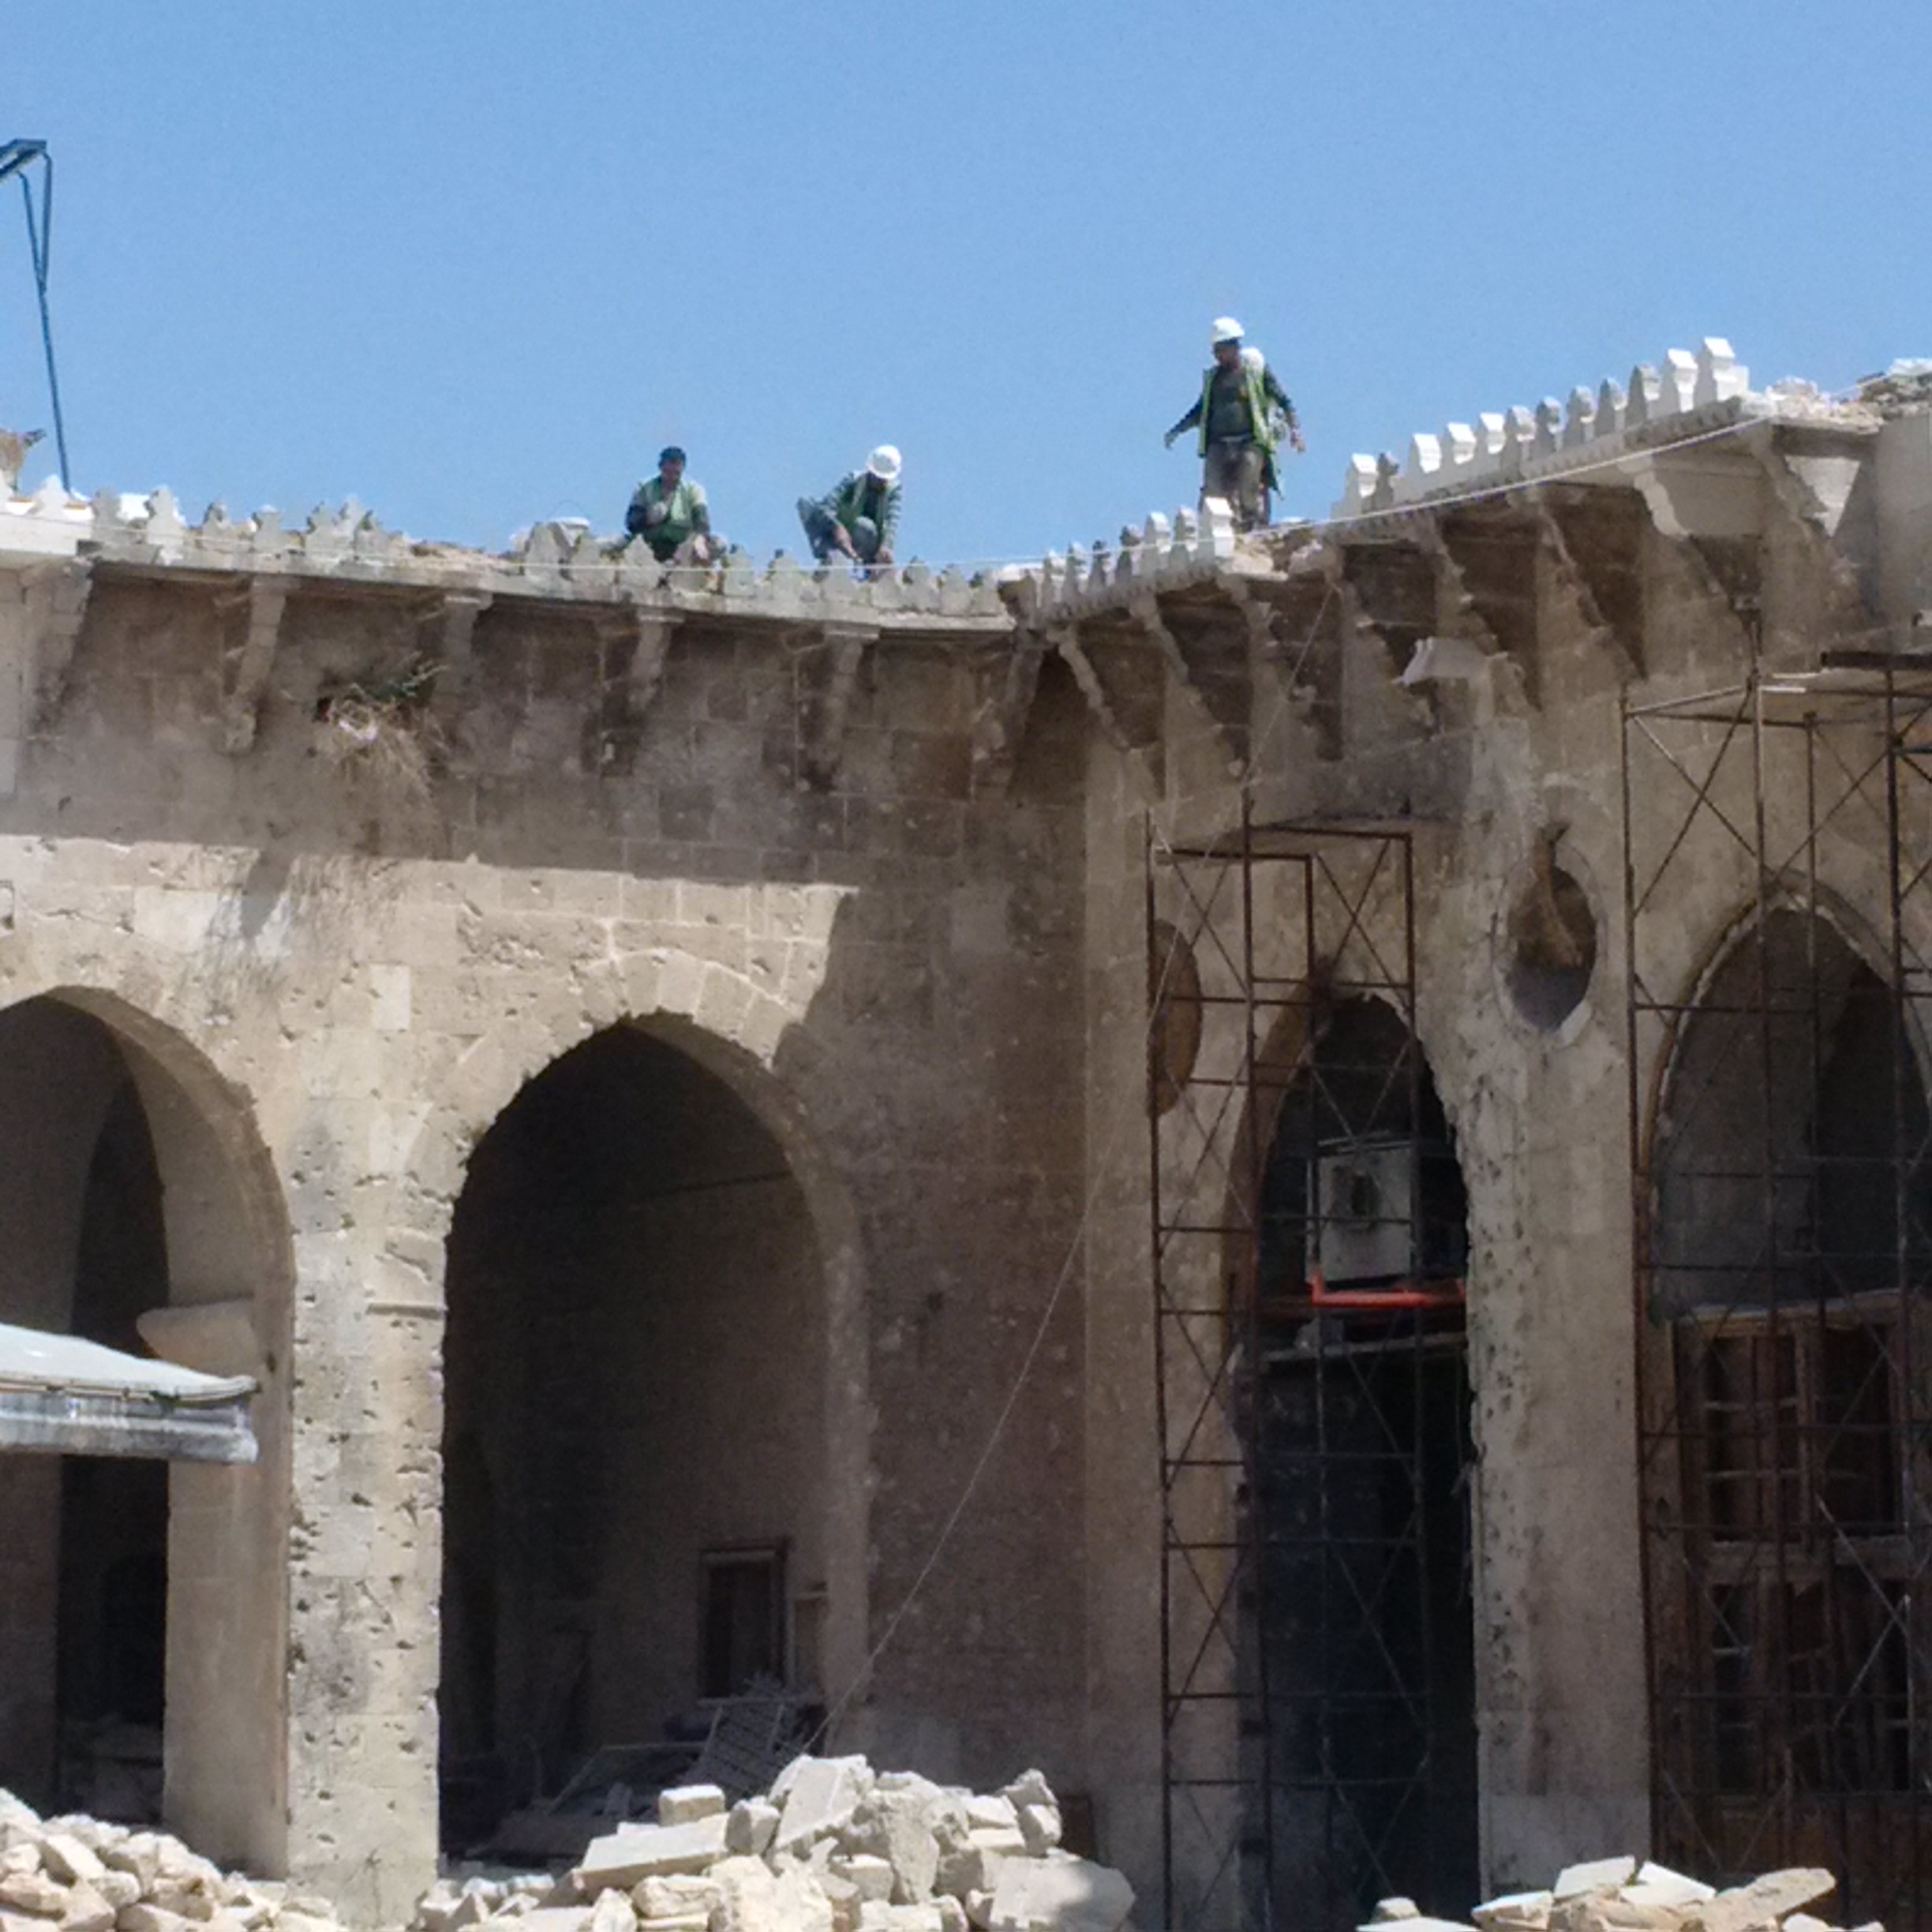 Aleppo's Umayyad Mosque under restoration, funded by Chechnya's Ramzan Kadyrov, a key ally of Russia's Putin.